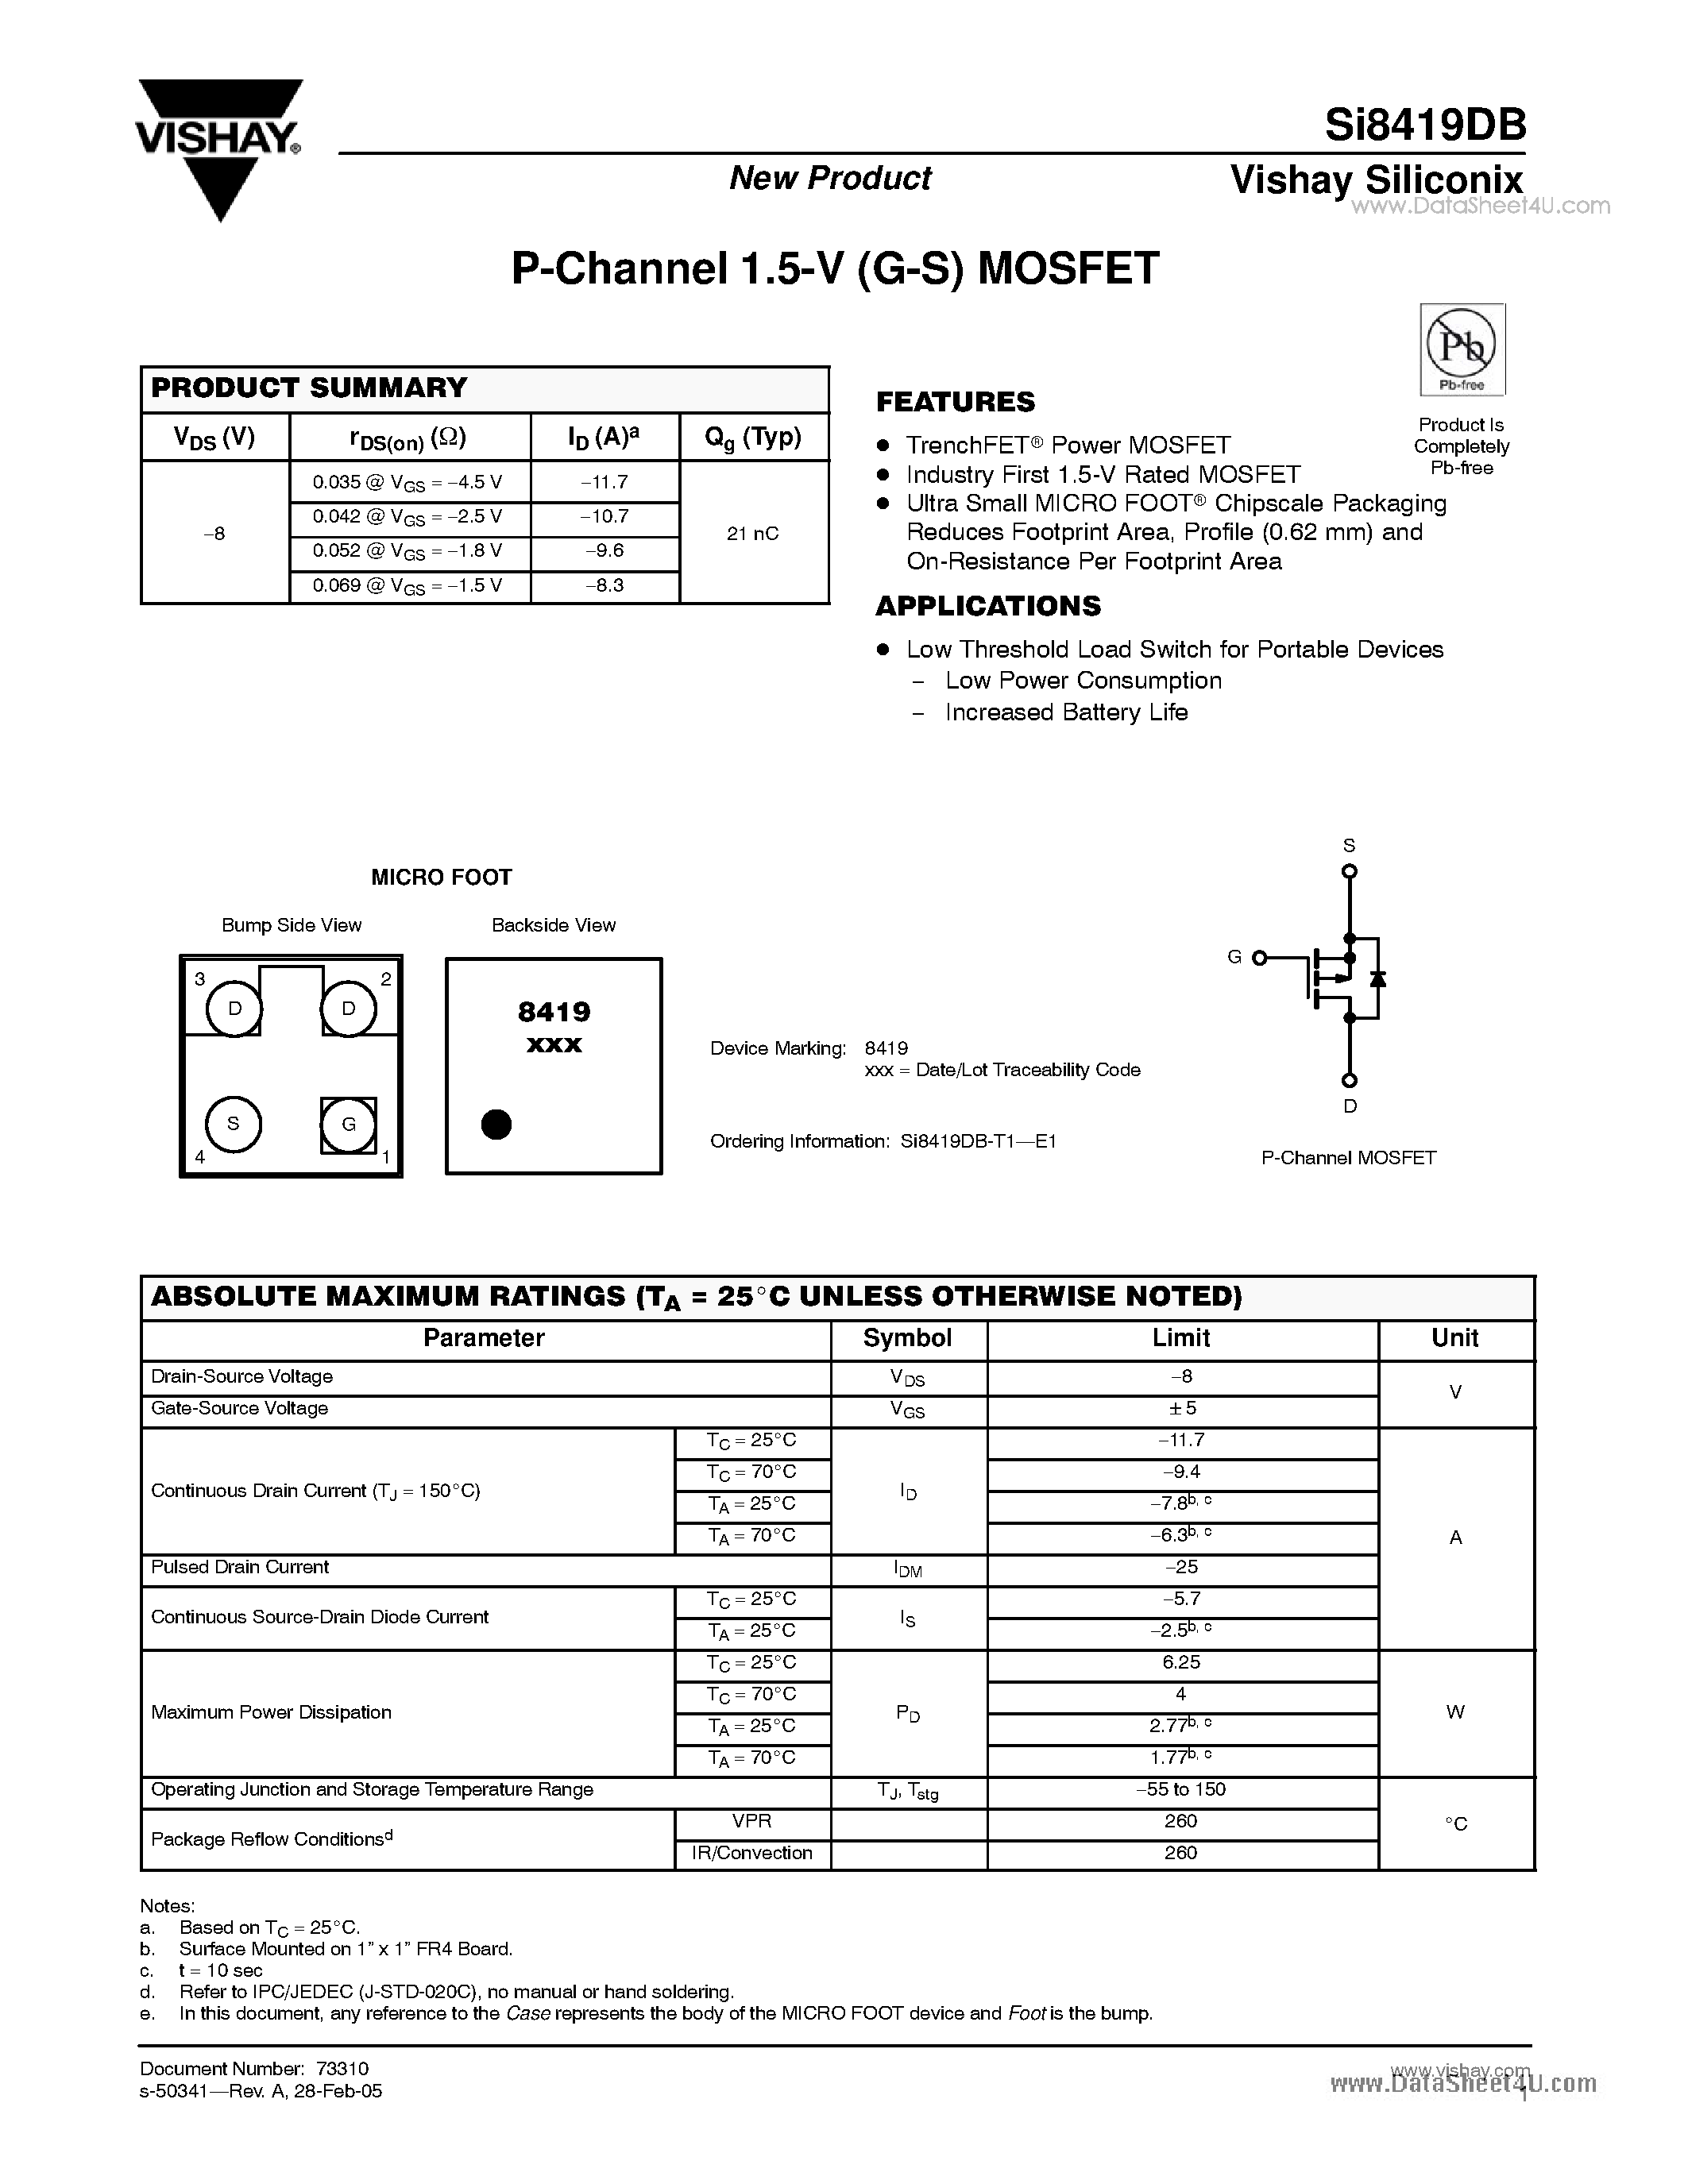 Даташит Si8419DB - P-Channel 1.5-V (G-S) MOSFET страница 1